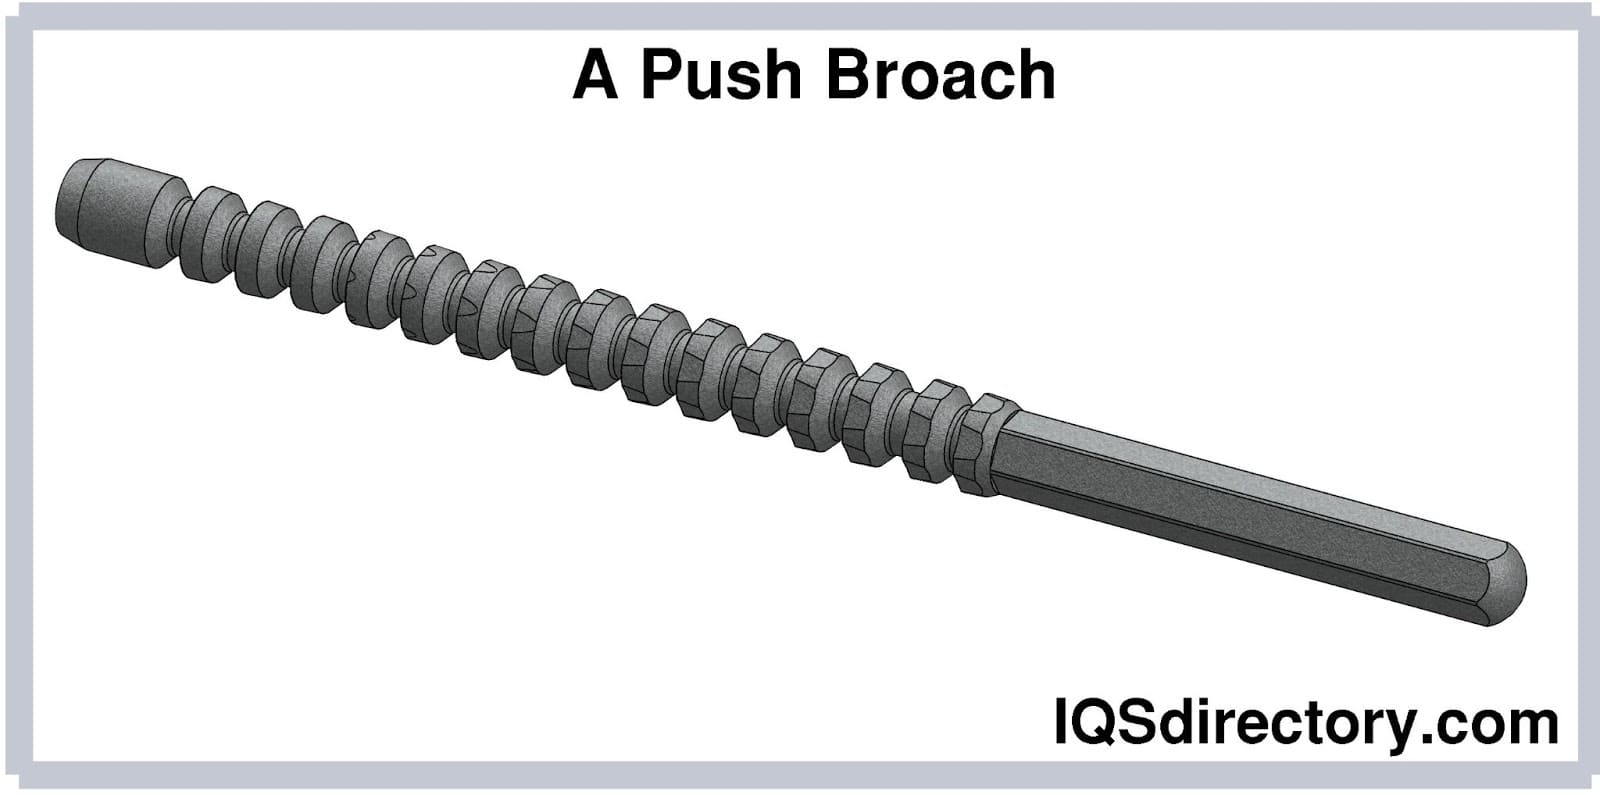 A Push Broach